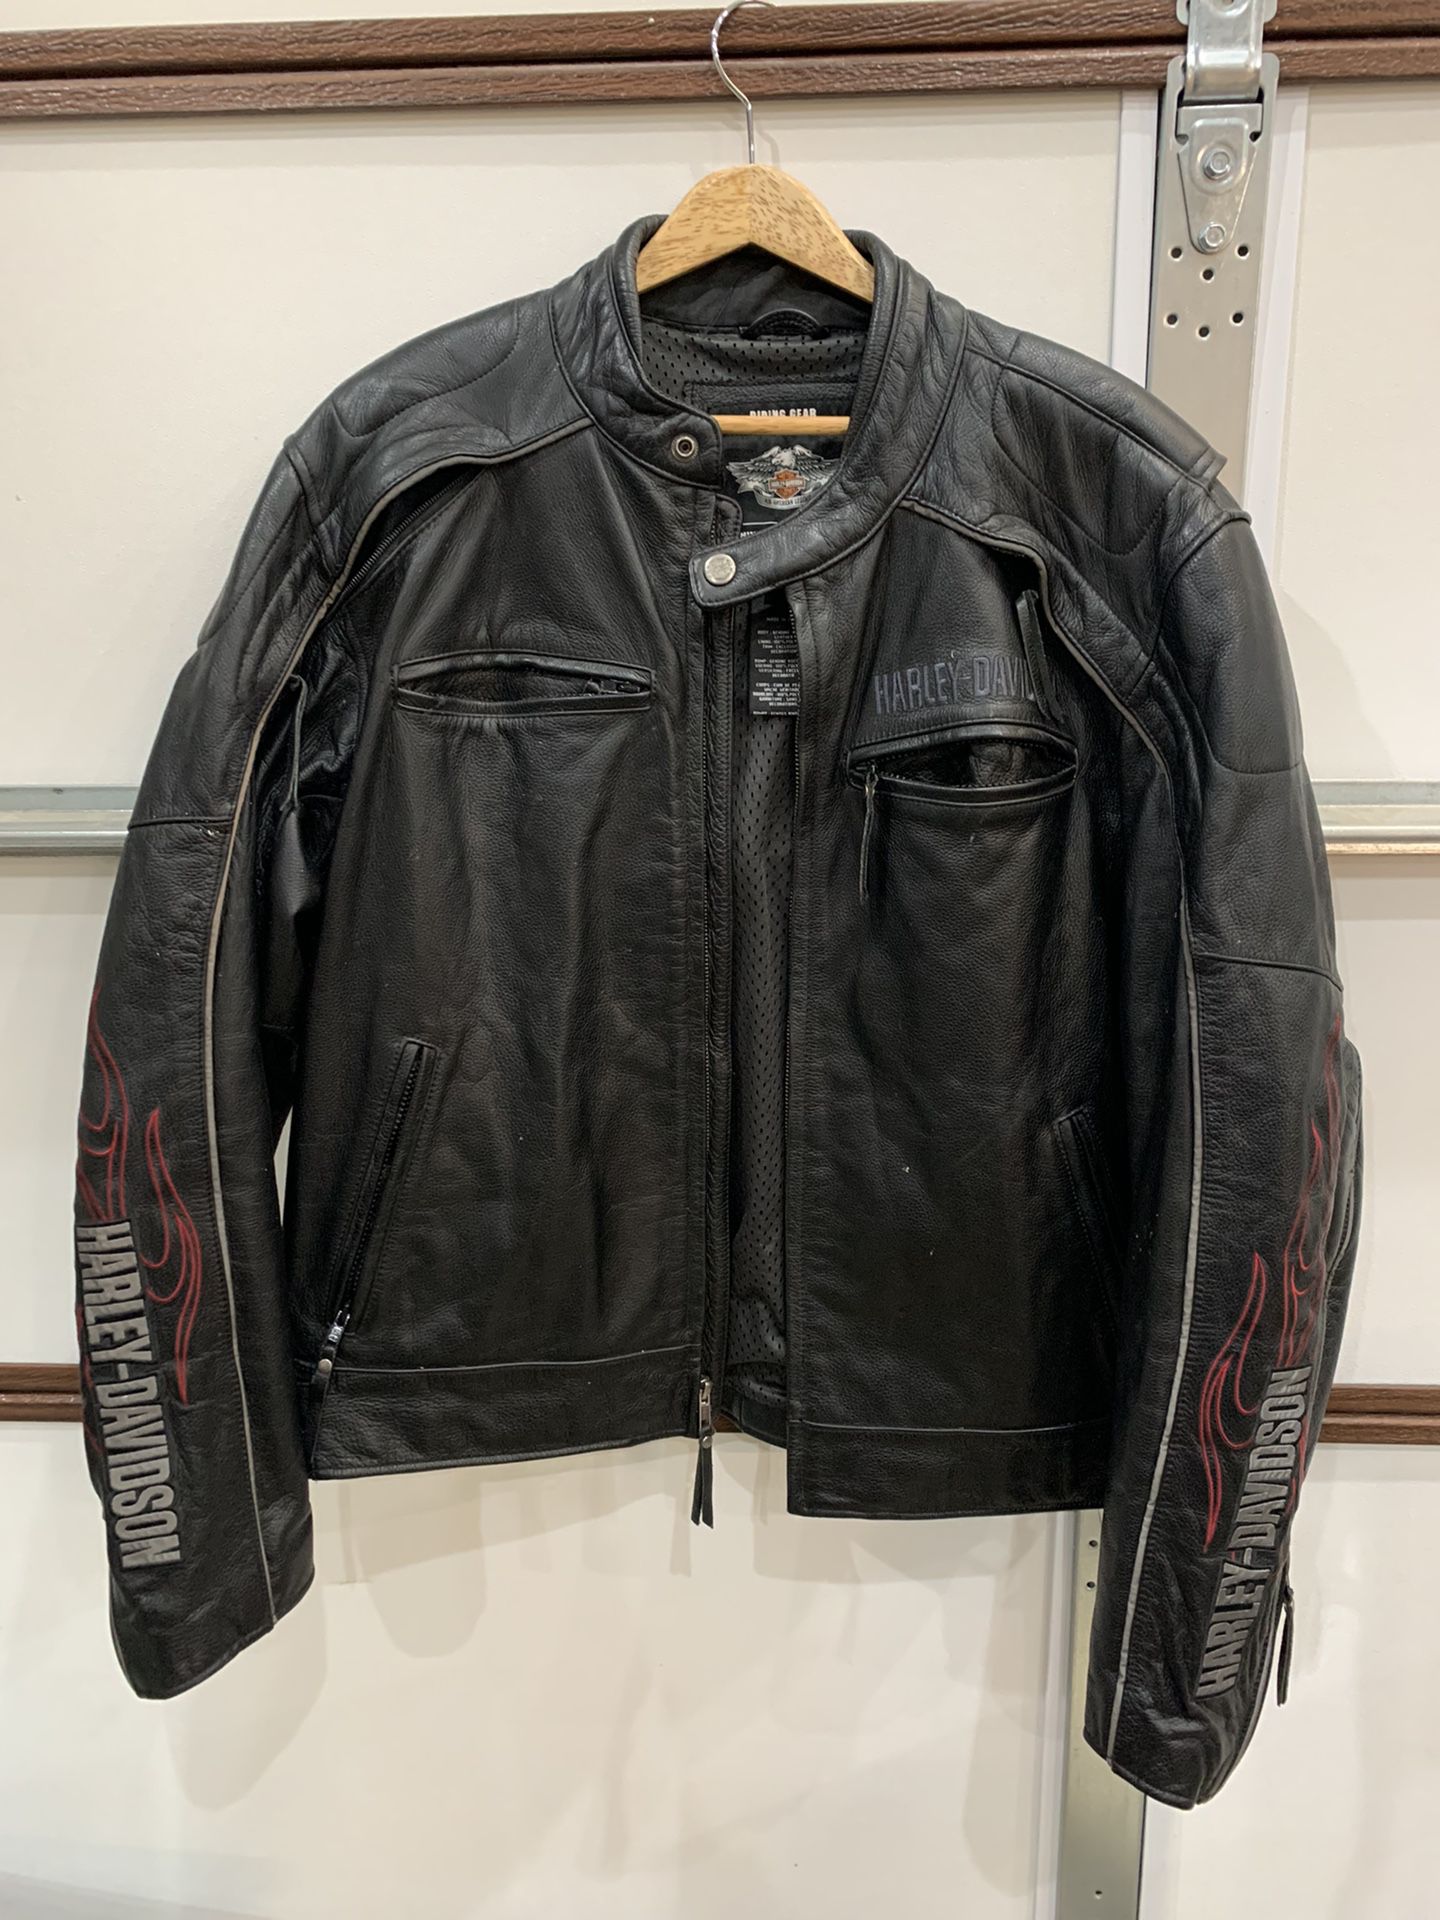 Harley Davidson Leather Rider Jackets 